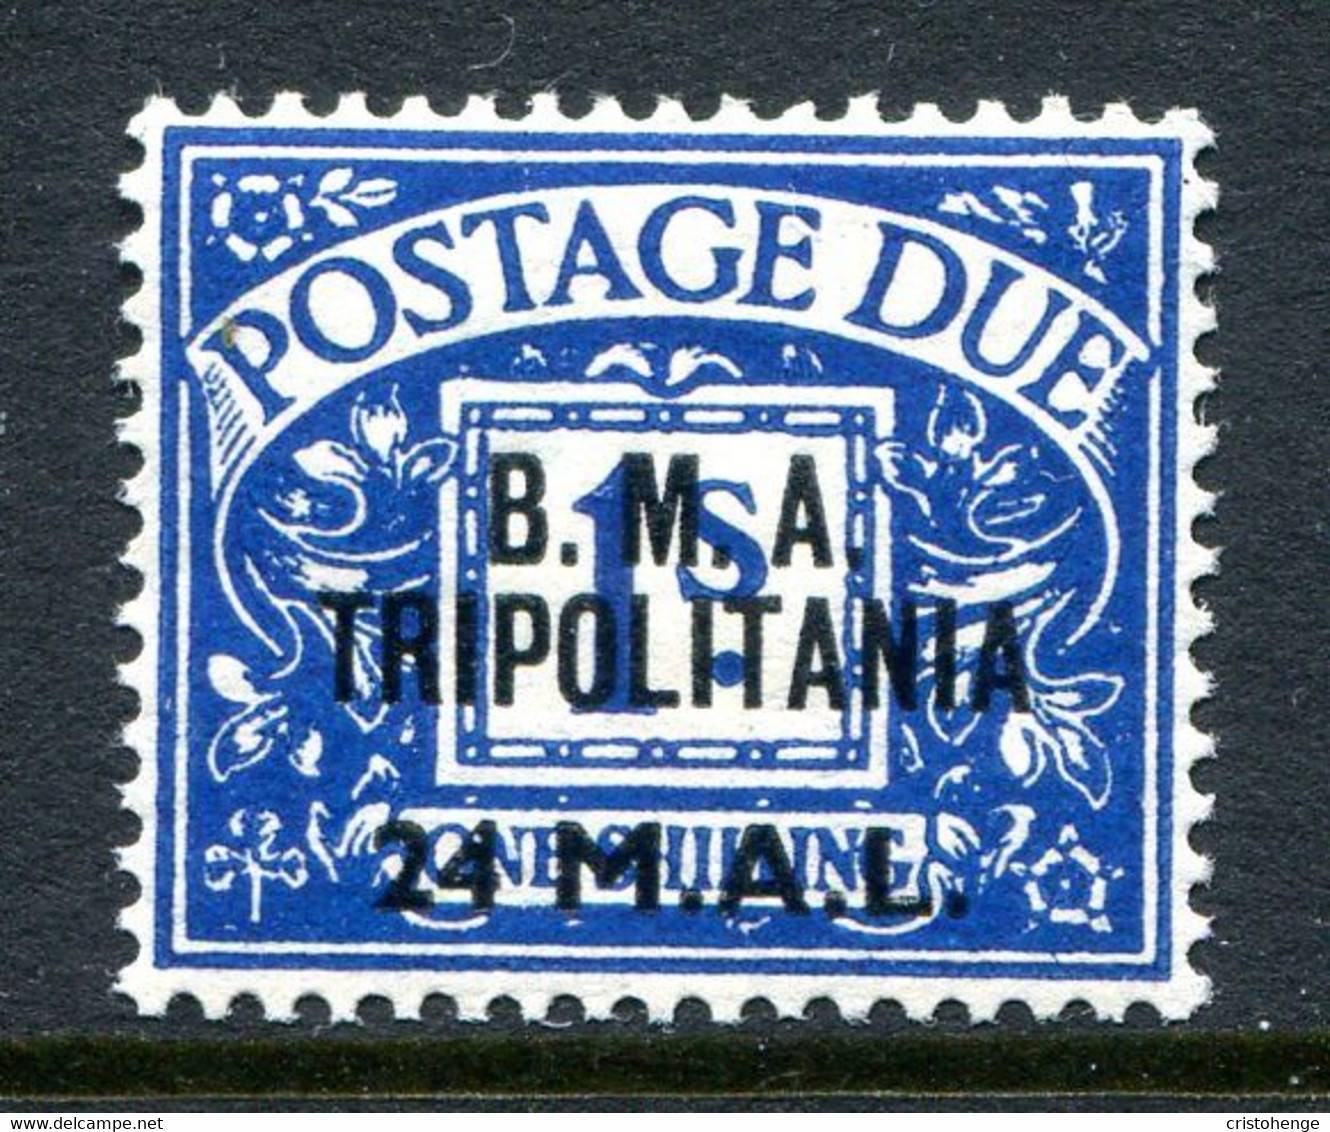 British Occ. Italian Colonies - Tripolitania - 1948 Postage Dues - B.M.A. - 24l On 1/- Deep Blue LHM (SG TD5) - Tripolitania